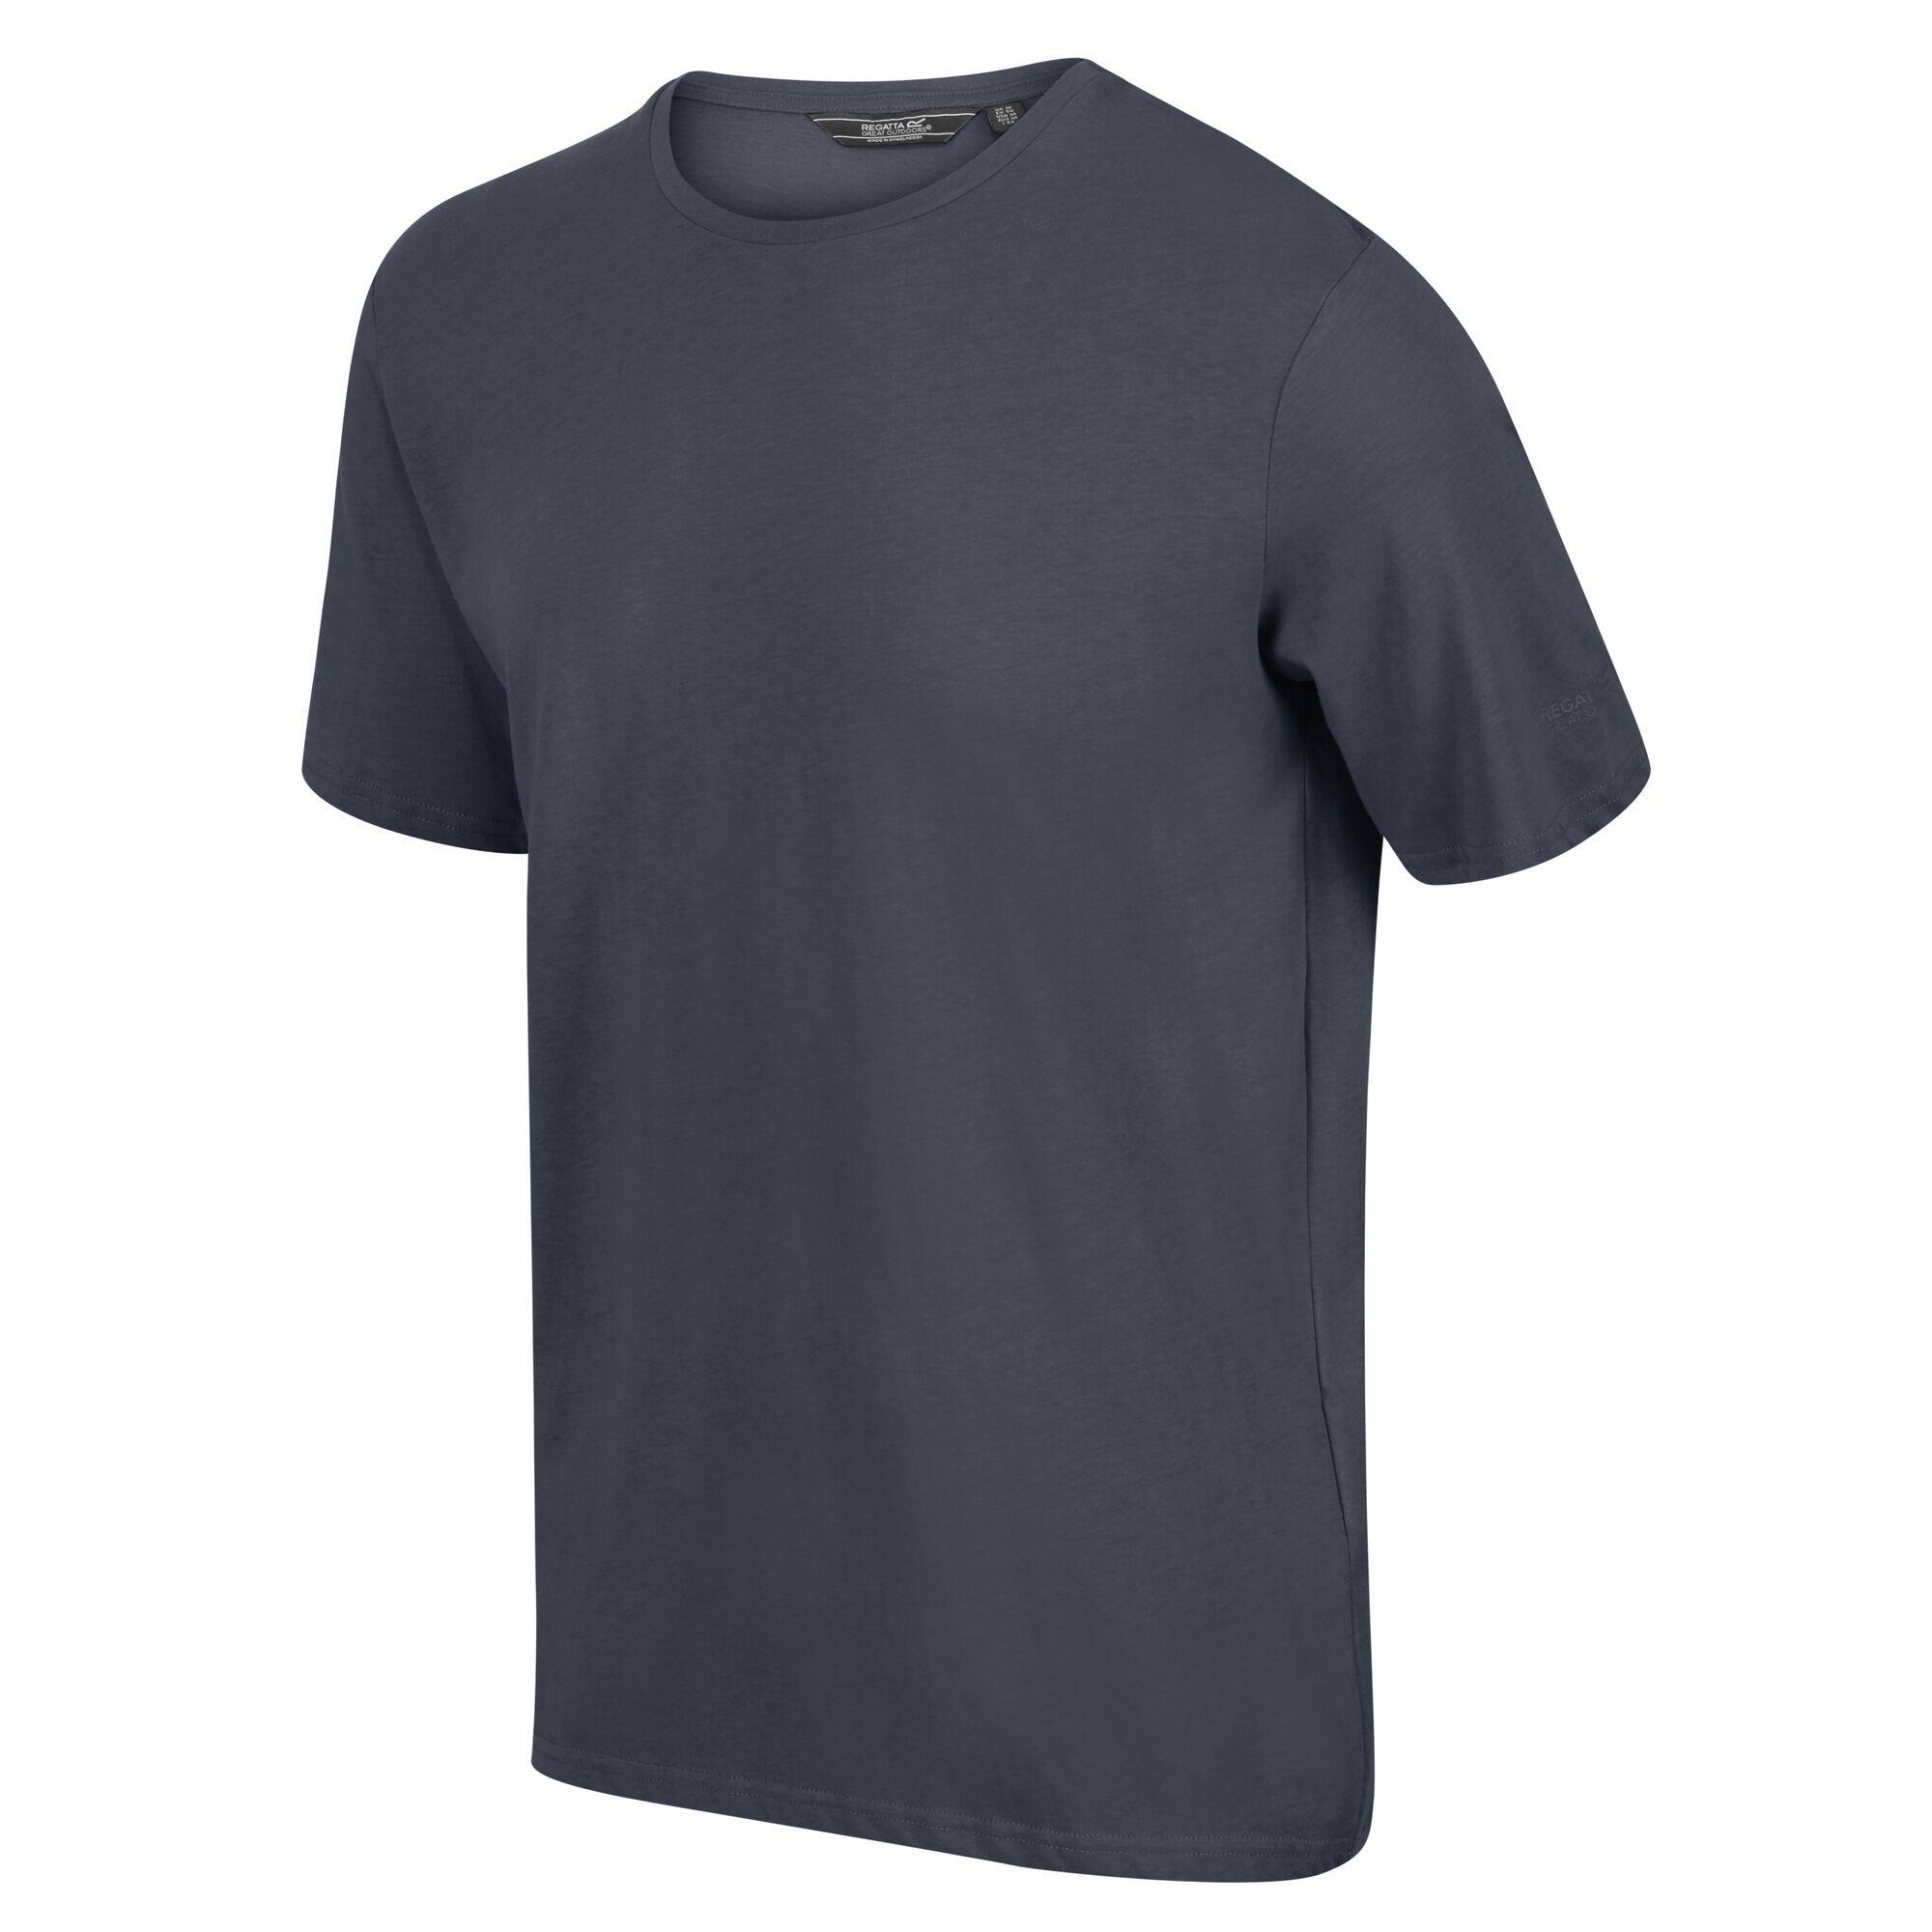 Tait Men's Walking Short Sleeve T-Shirt - Grey 4/5